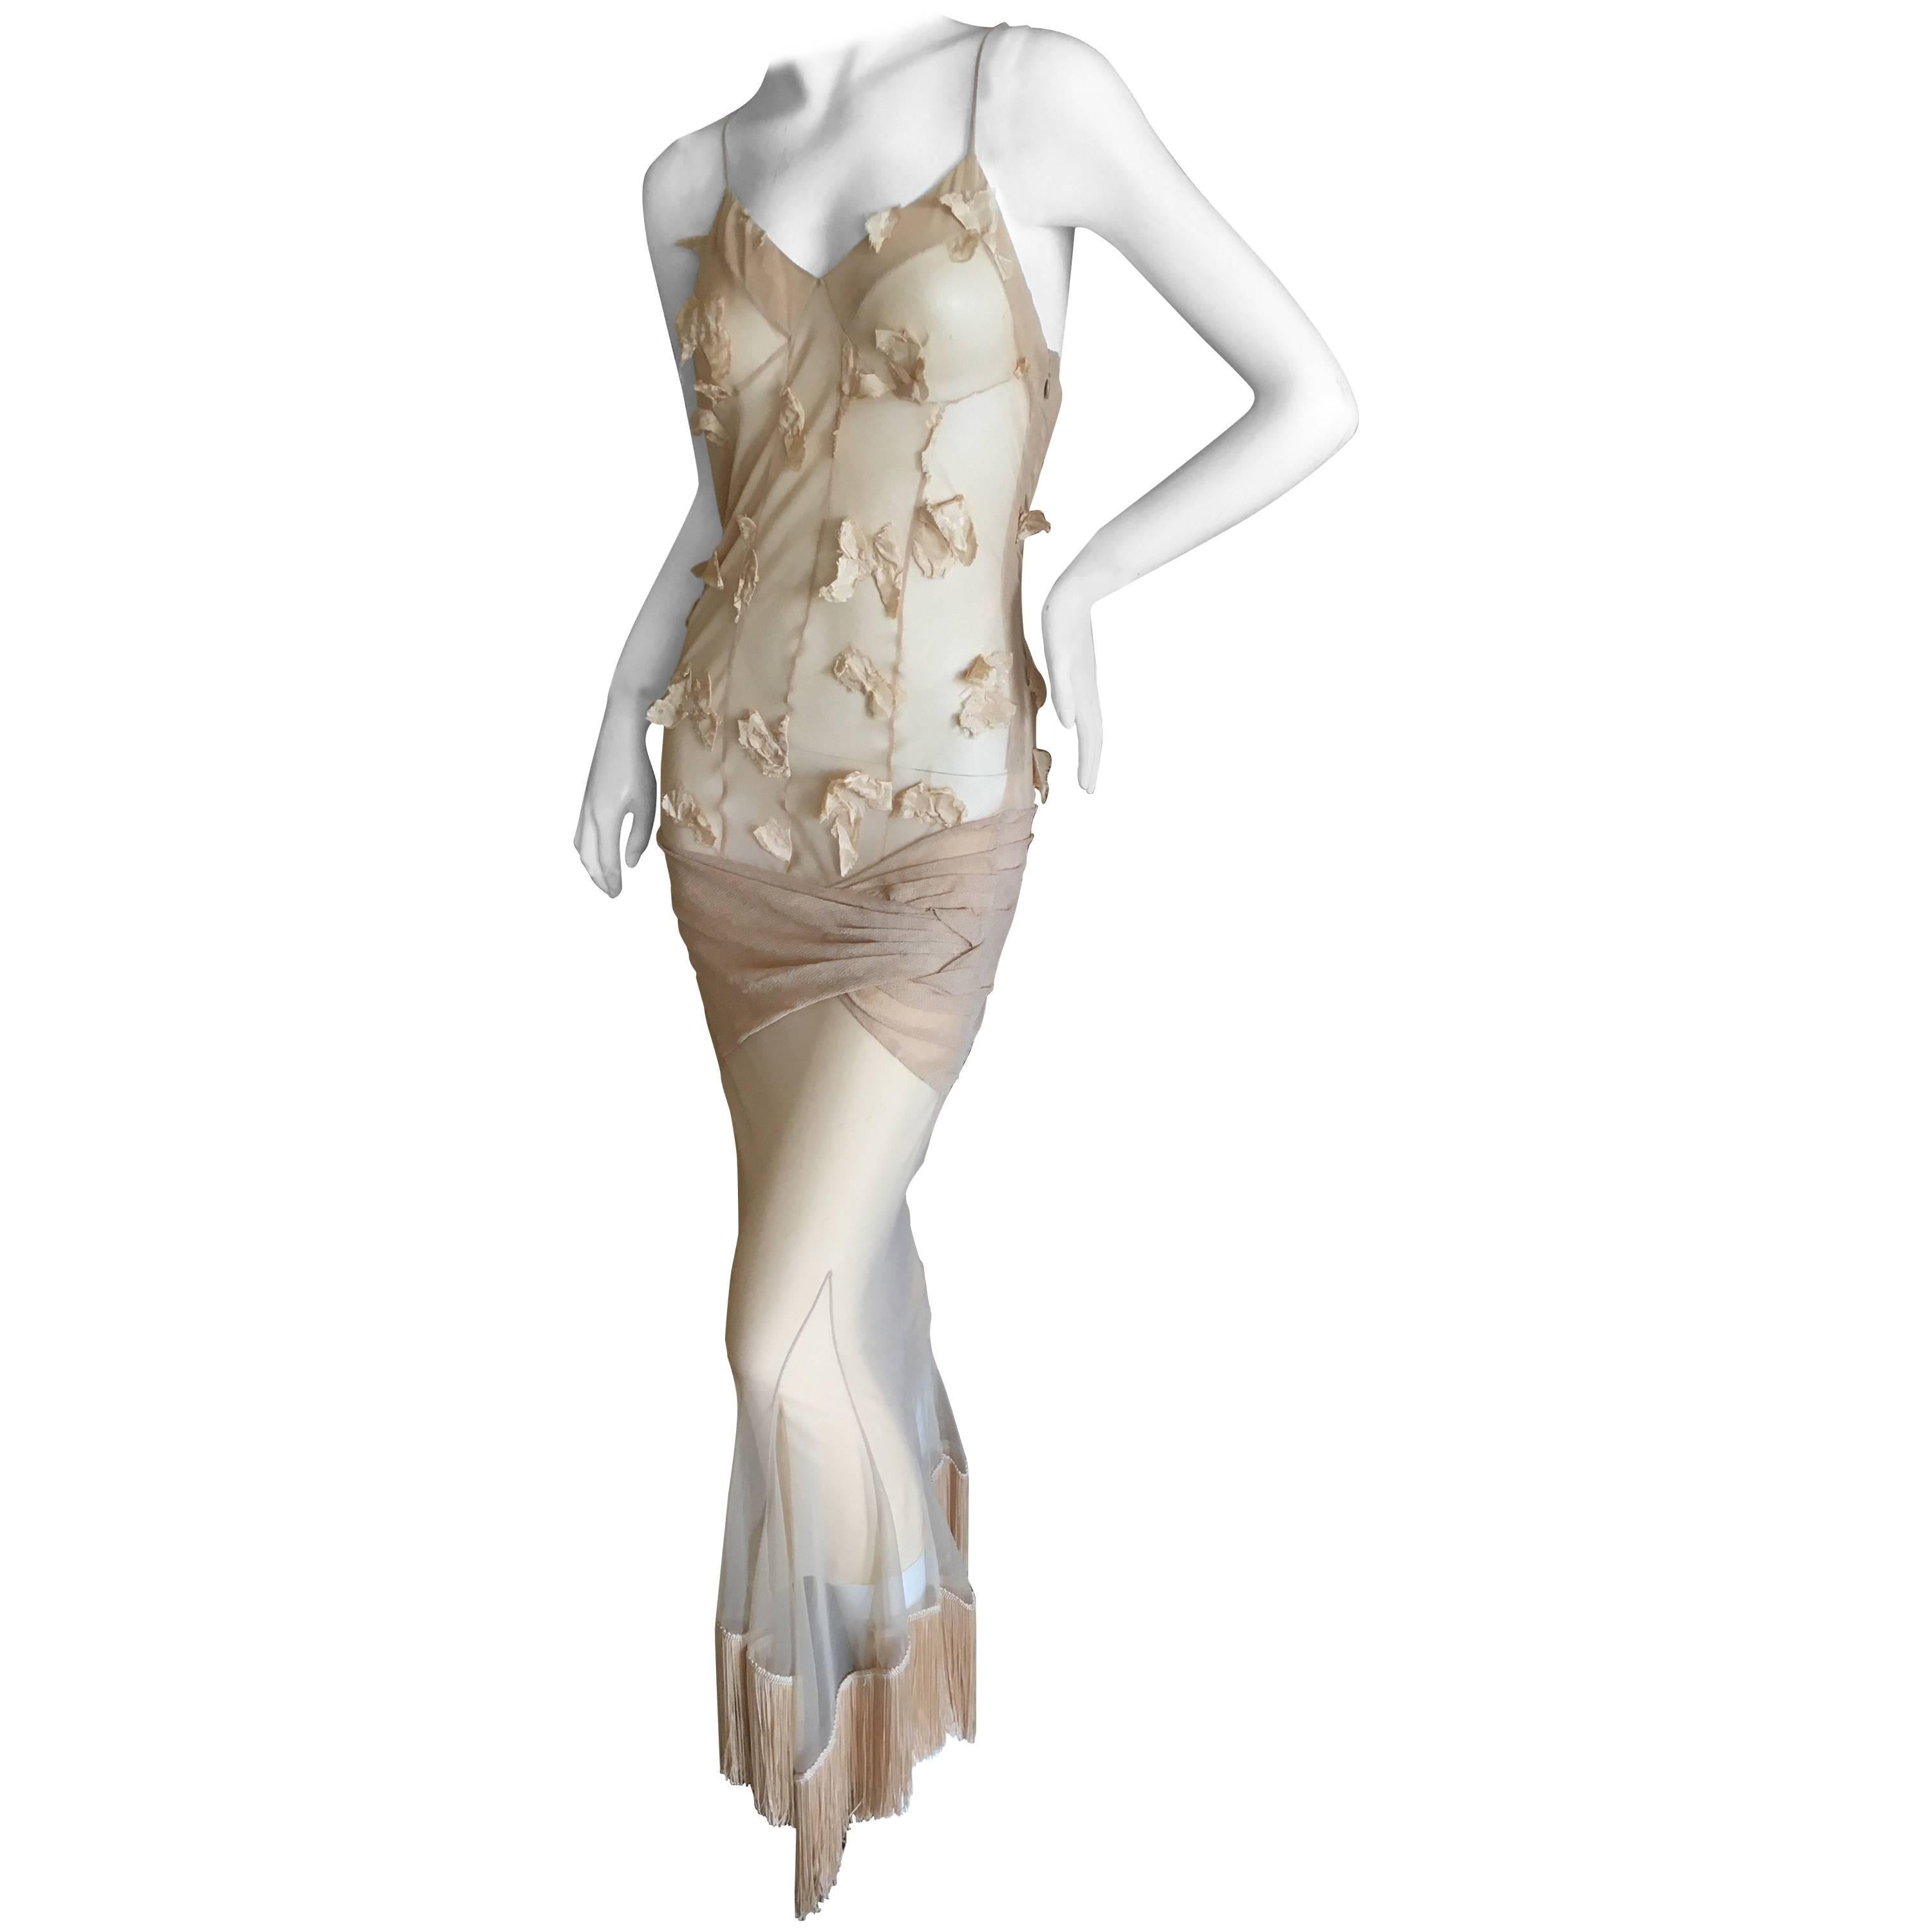 Christian Dior by John Galliano Sexy Sheer Nude Dress with Piano Finge Hem